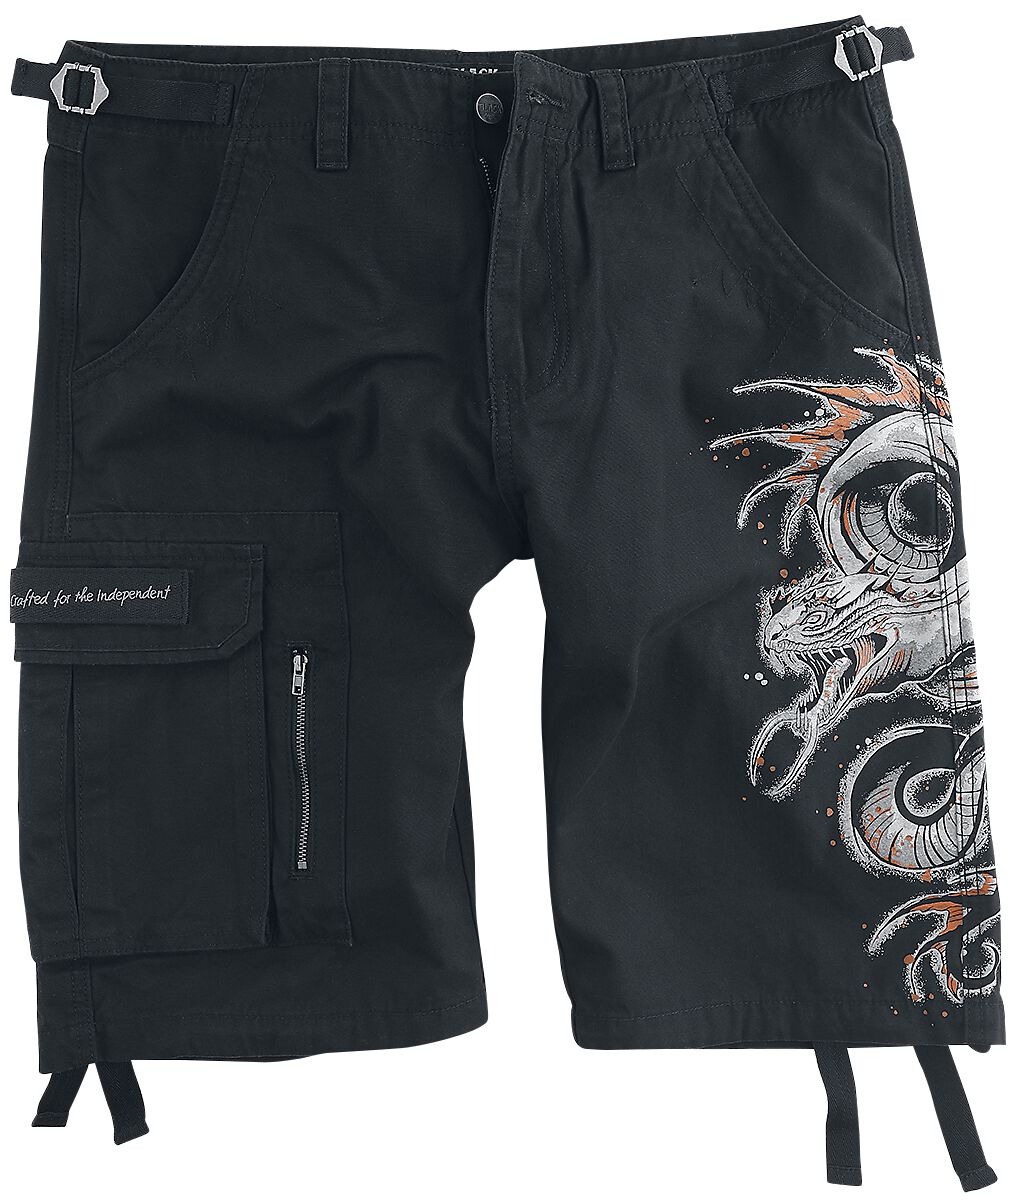 Black Premium by EMP Shorts with Dragon Print Short schwarz in S